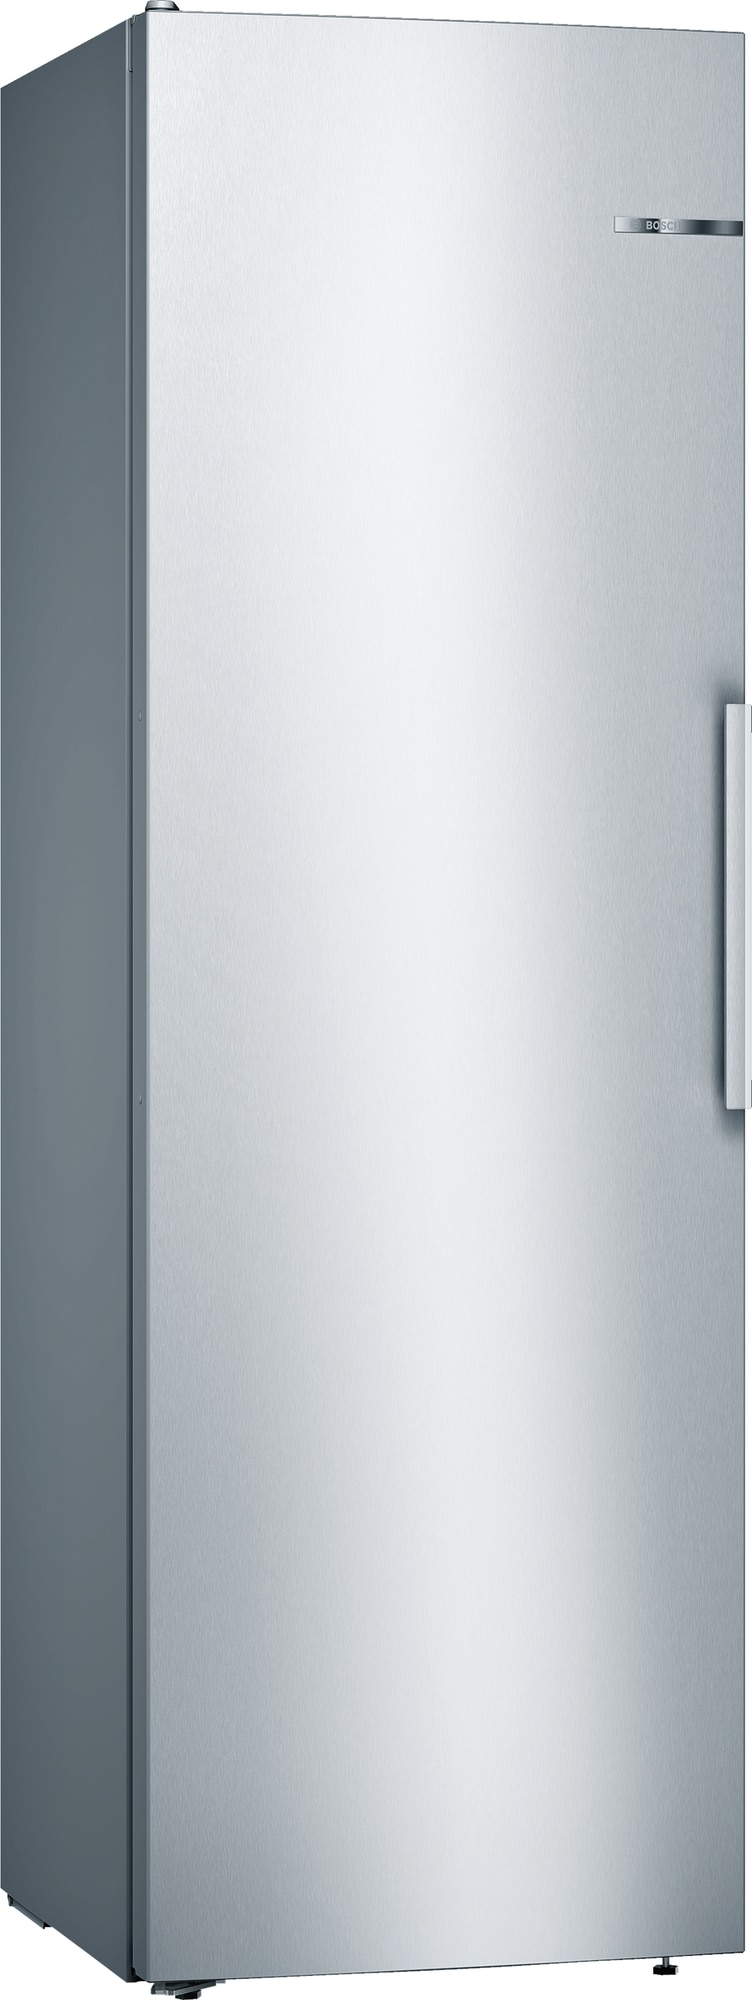 Bosch Series 4 køleskab KSV36VLDP thumbnail